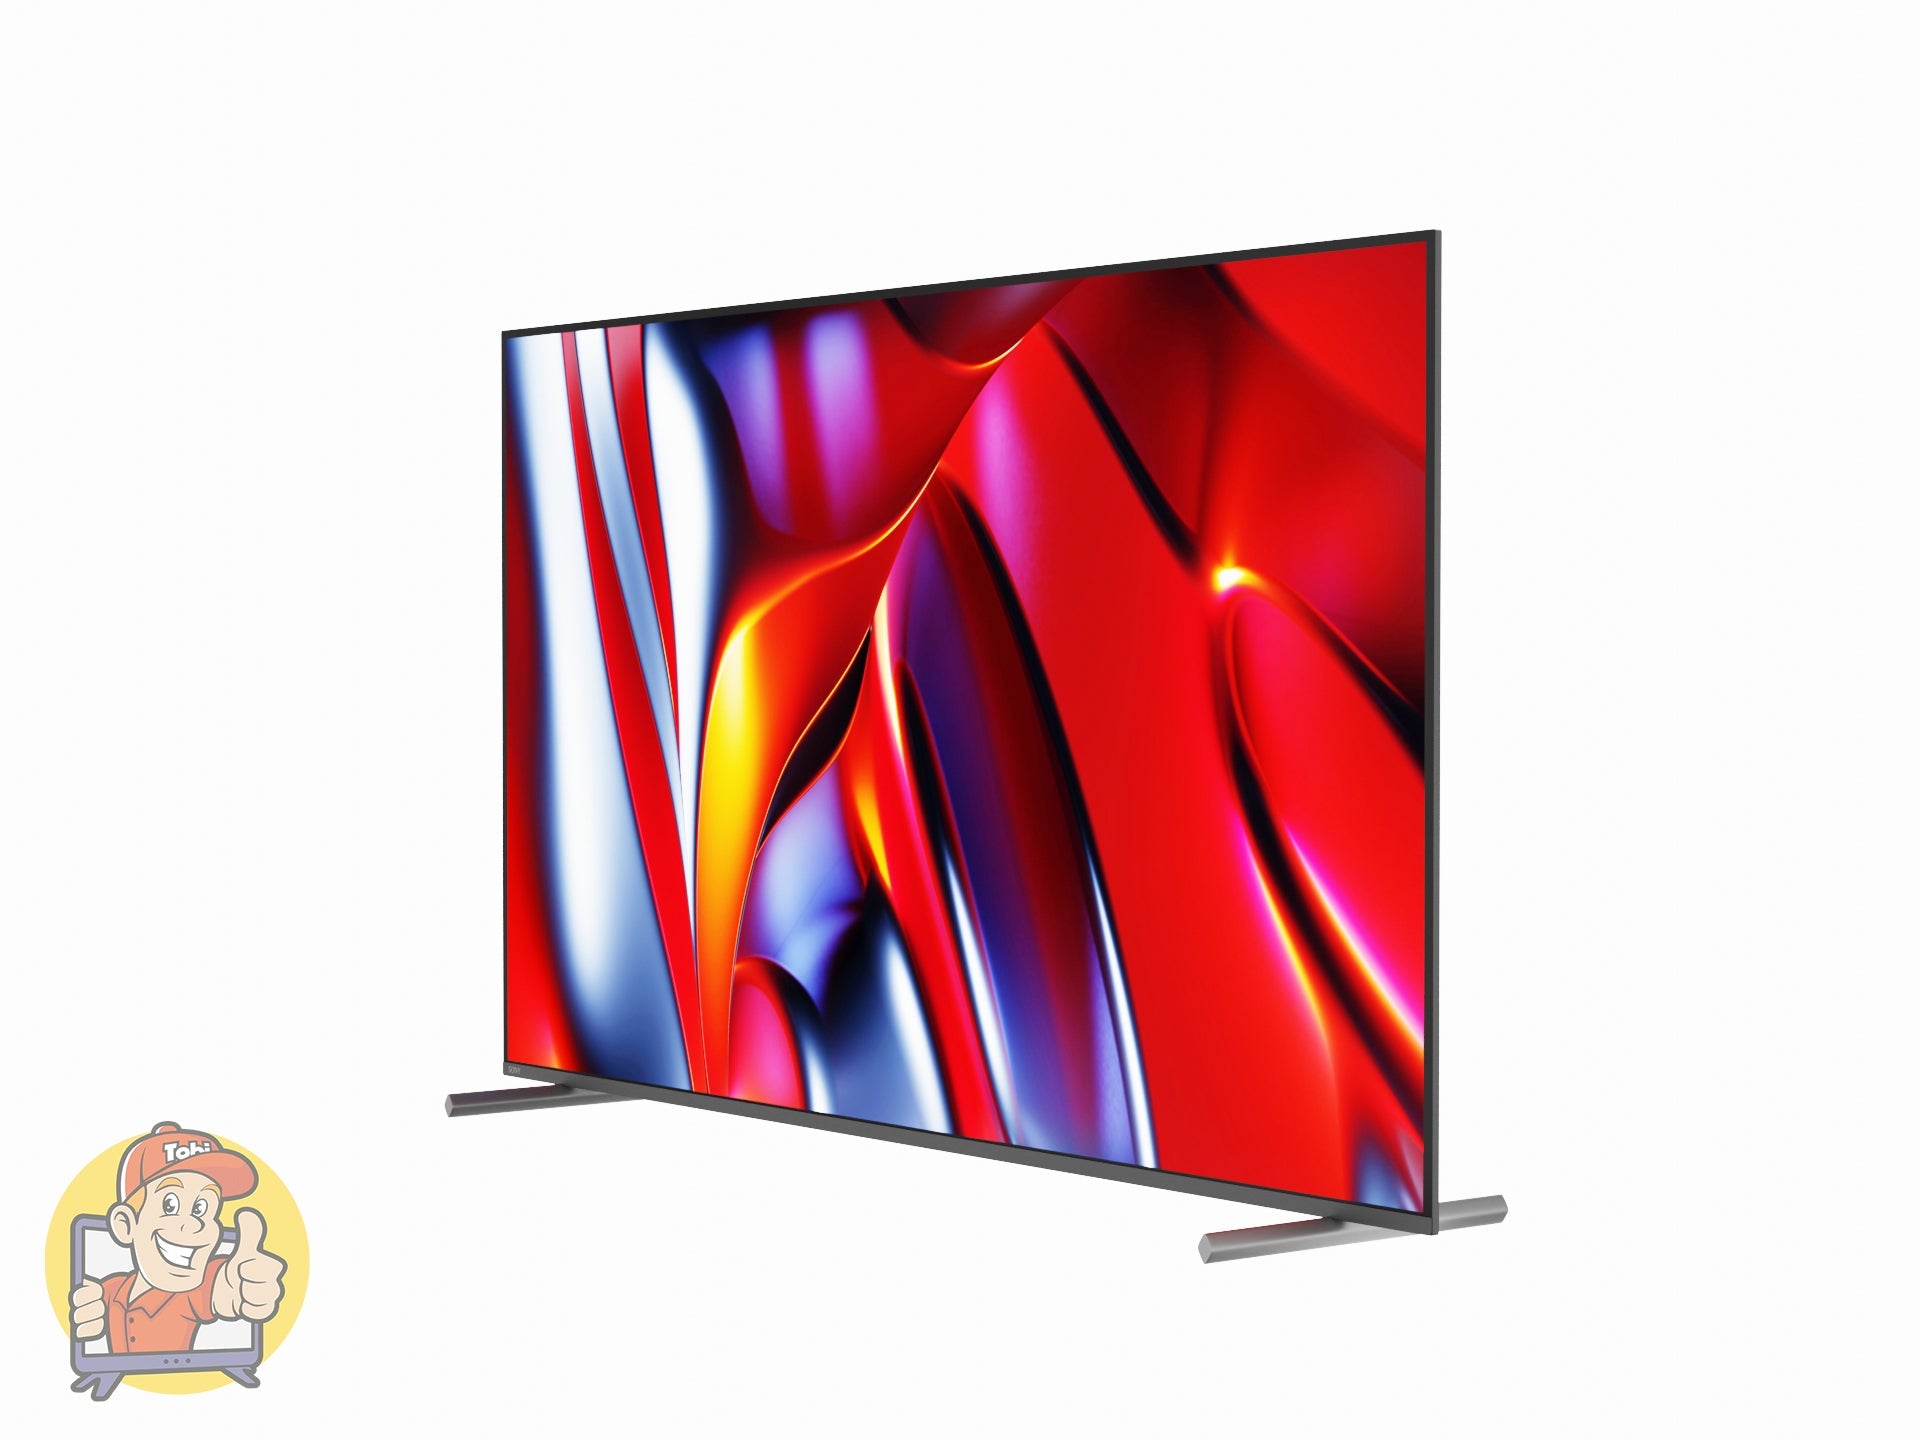 SONY BRAVIA XR-75X90L LED TV (Flat, 75 Zoll / 189 cm, UHD 4K, SMART TV, Google TV)